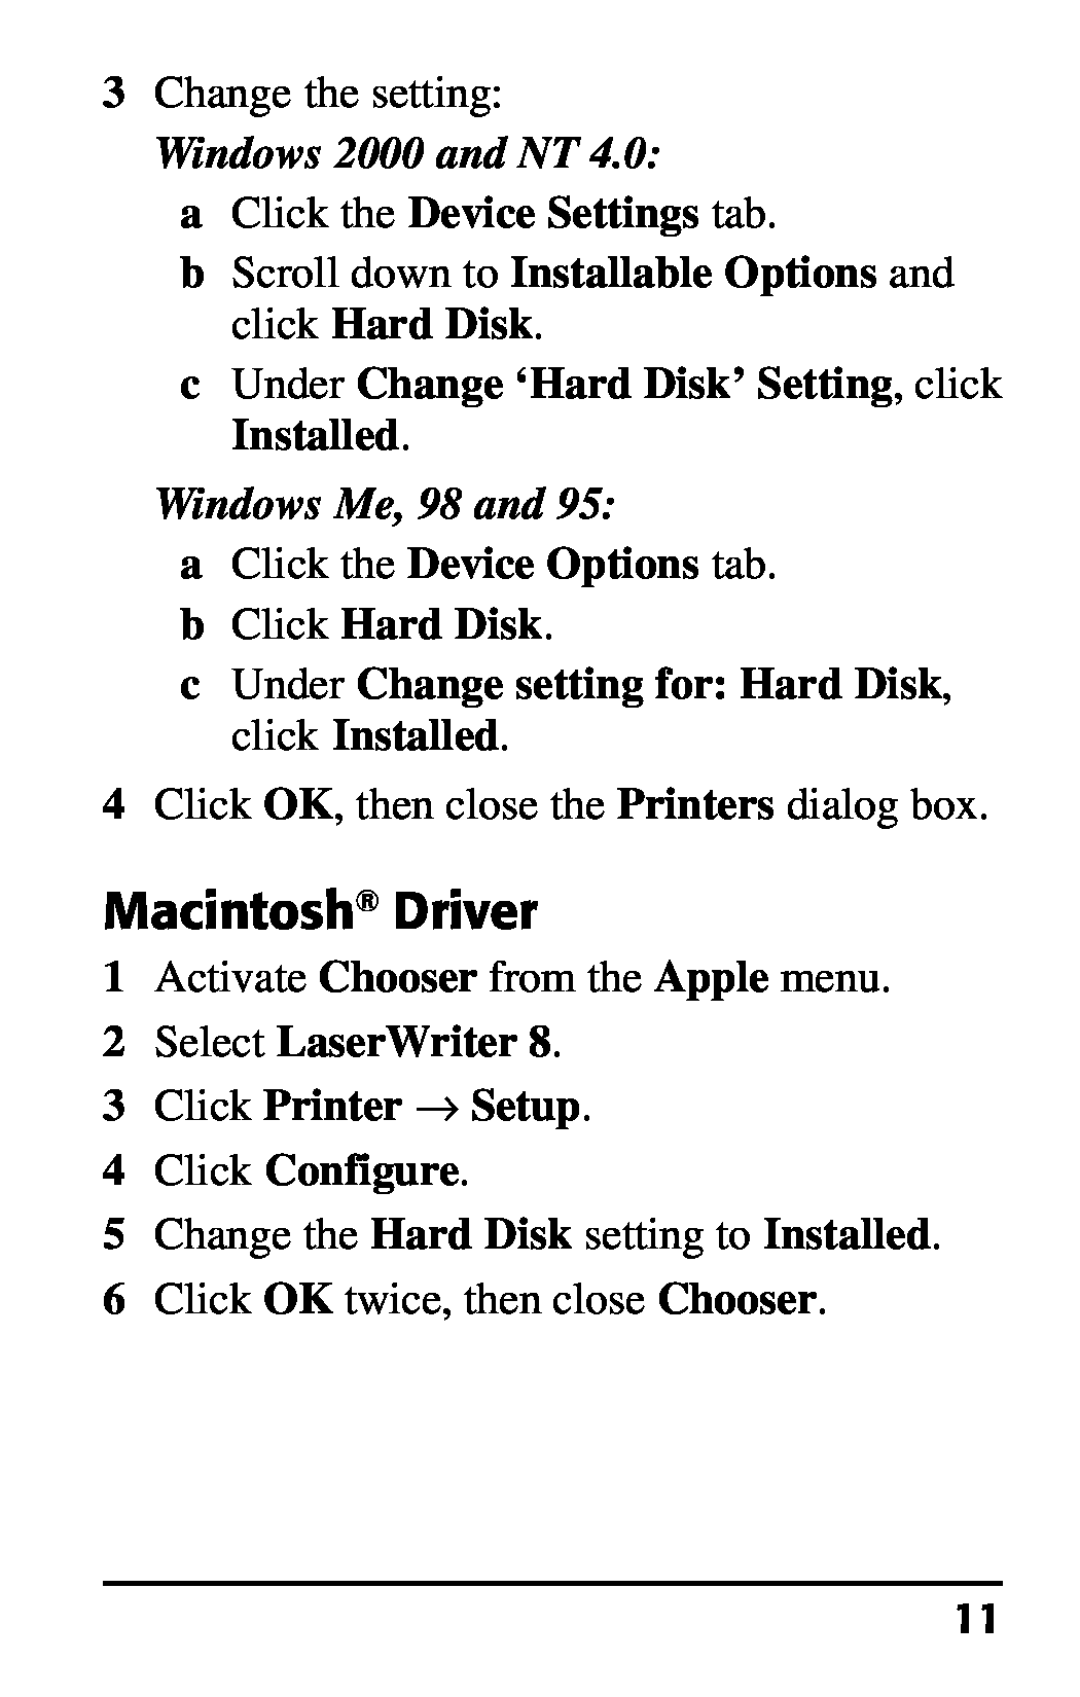 Oki 70037301 installation instructions Macintosh Driver, Windows 2000 and NT, Windows Me, 98 and 